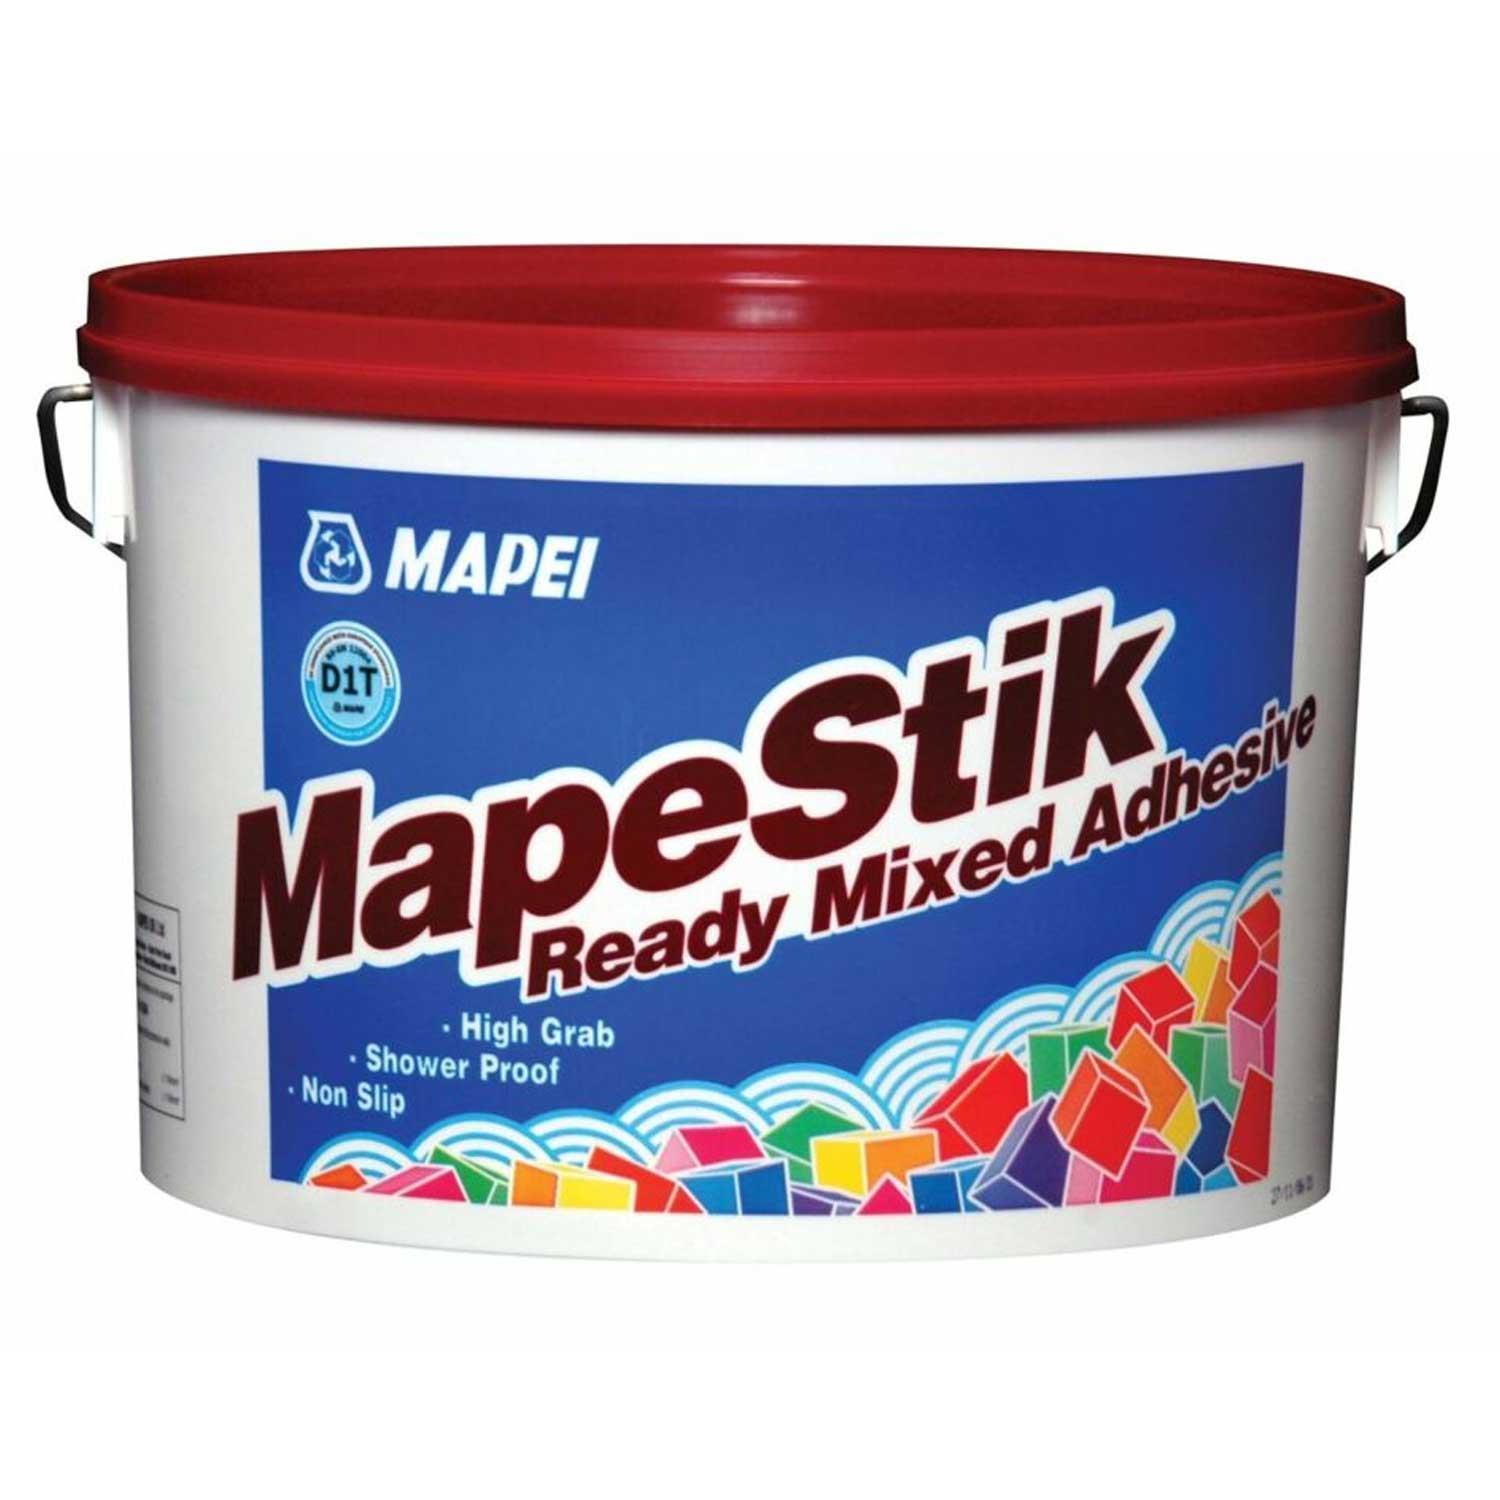 Mapei Mapestik Ready Mixed Adhesive Wall Tile